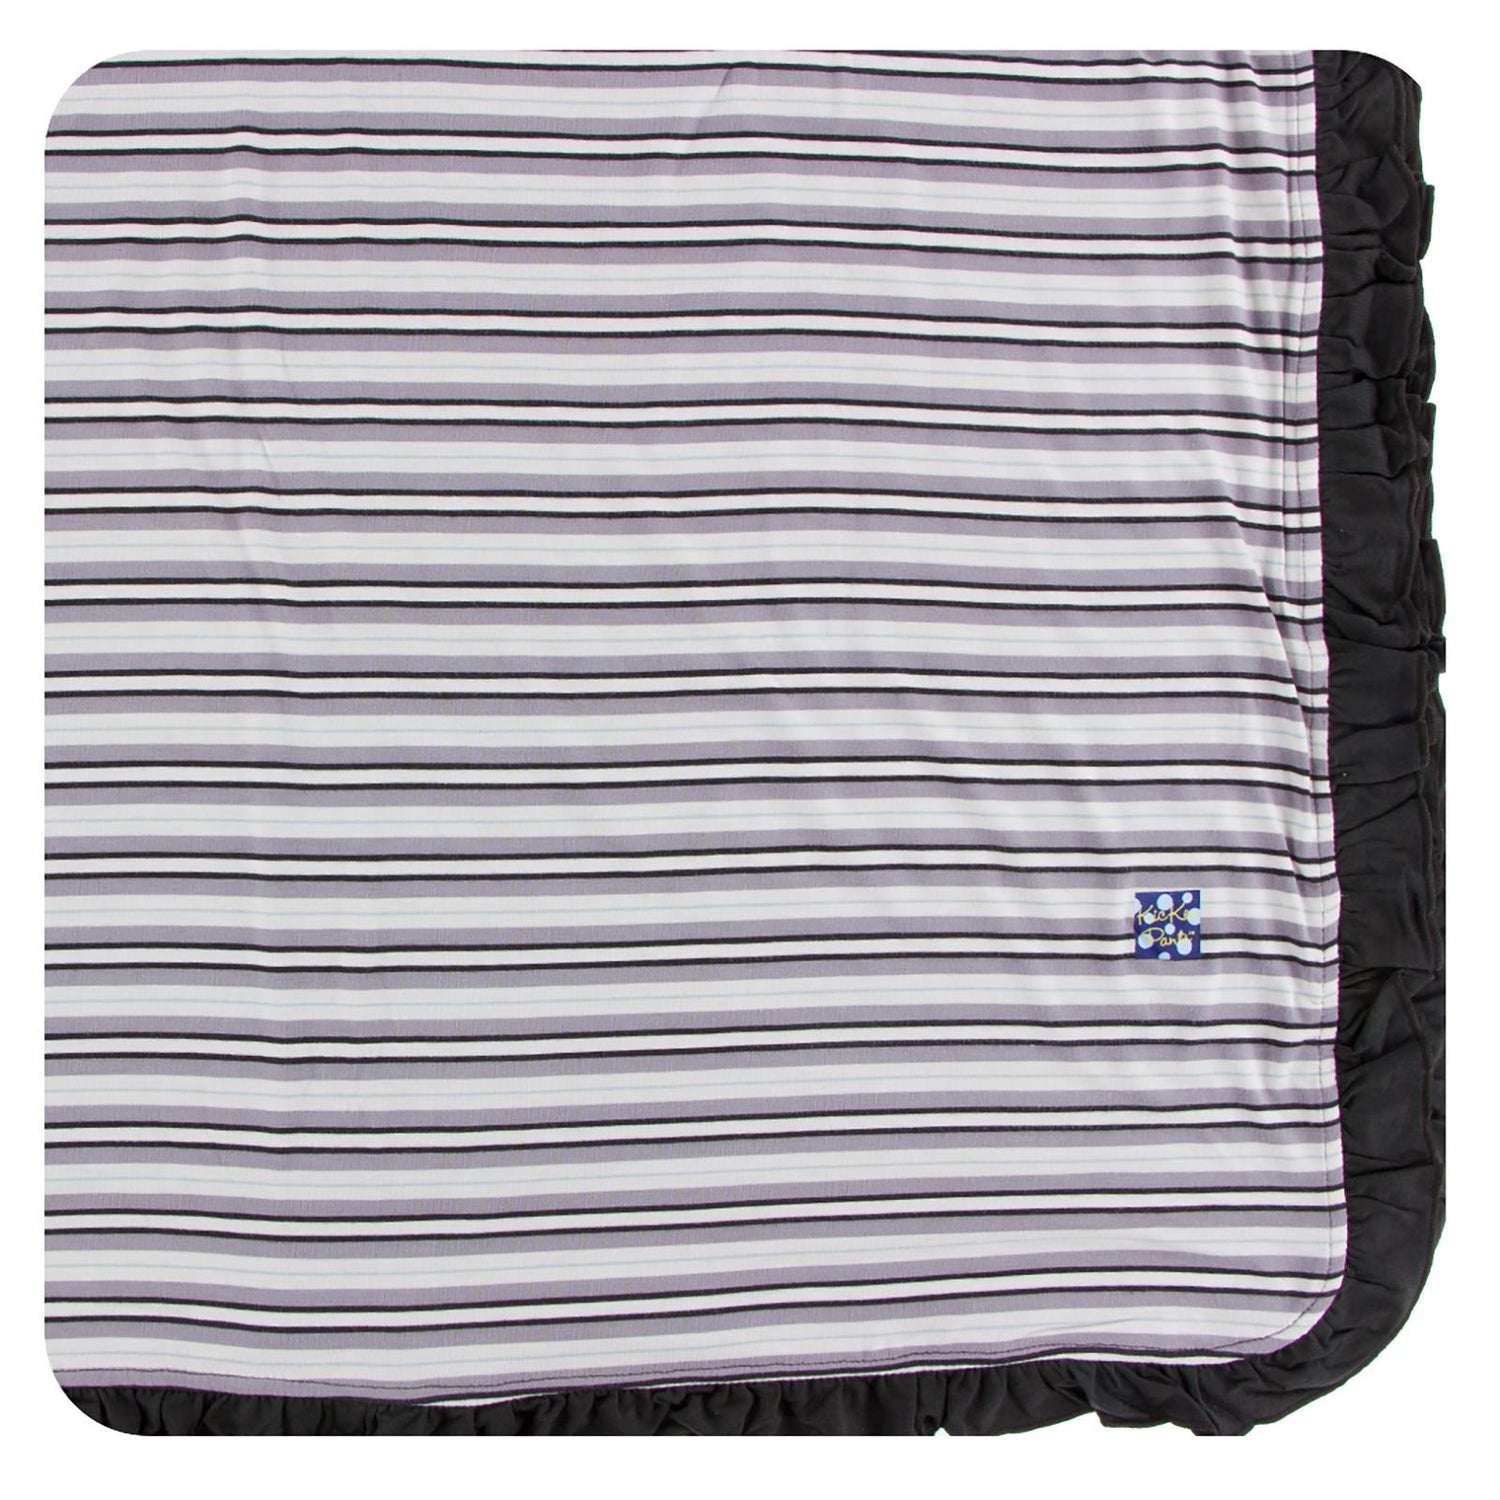 Print Ruffle Toddler Blanket in India Pure Stripe